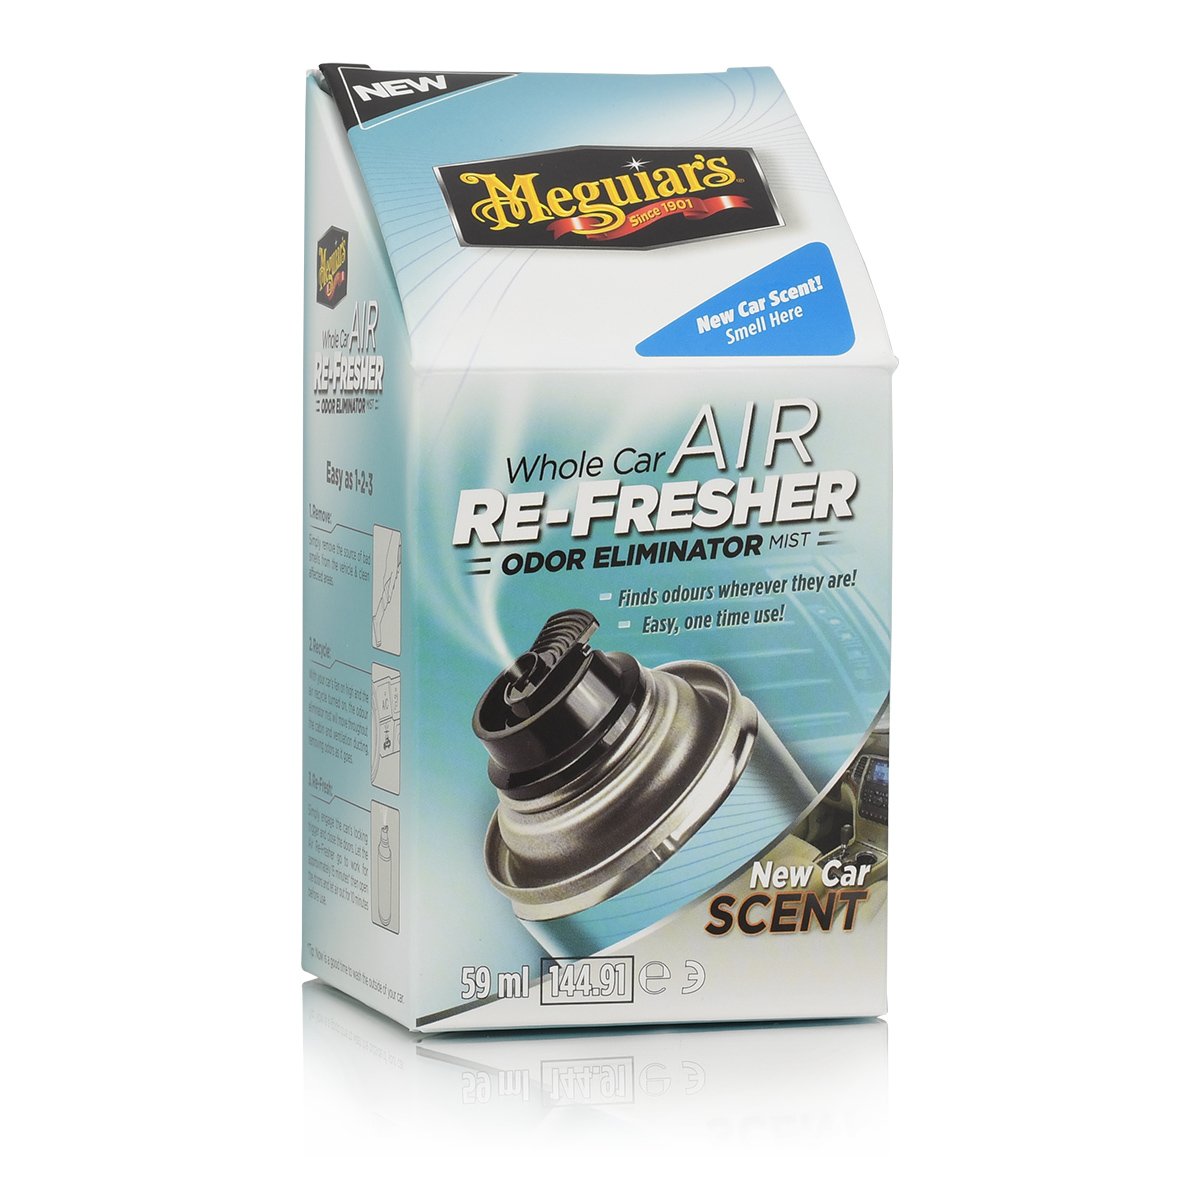 Meguiars Whole Car Air Re-Fresher Odor Eliminator